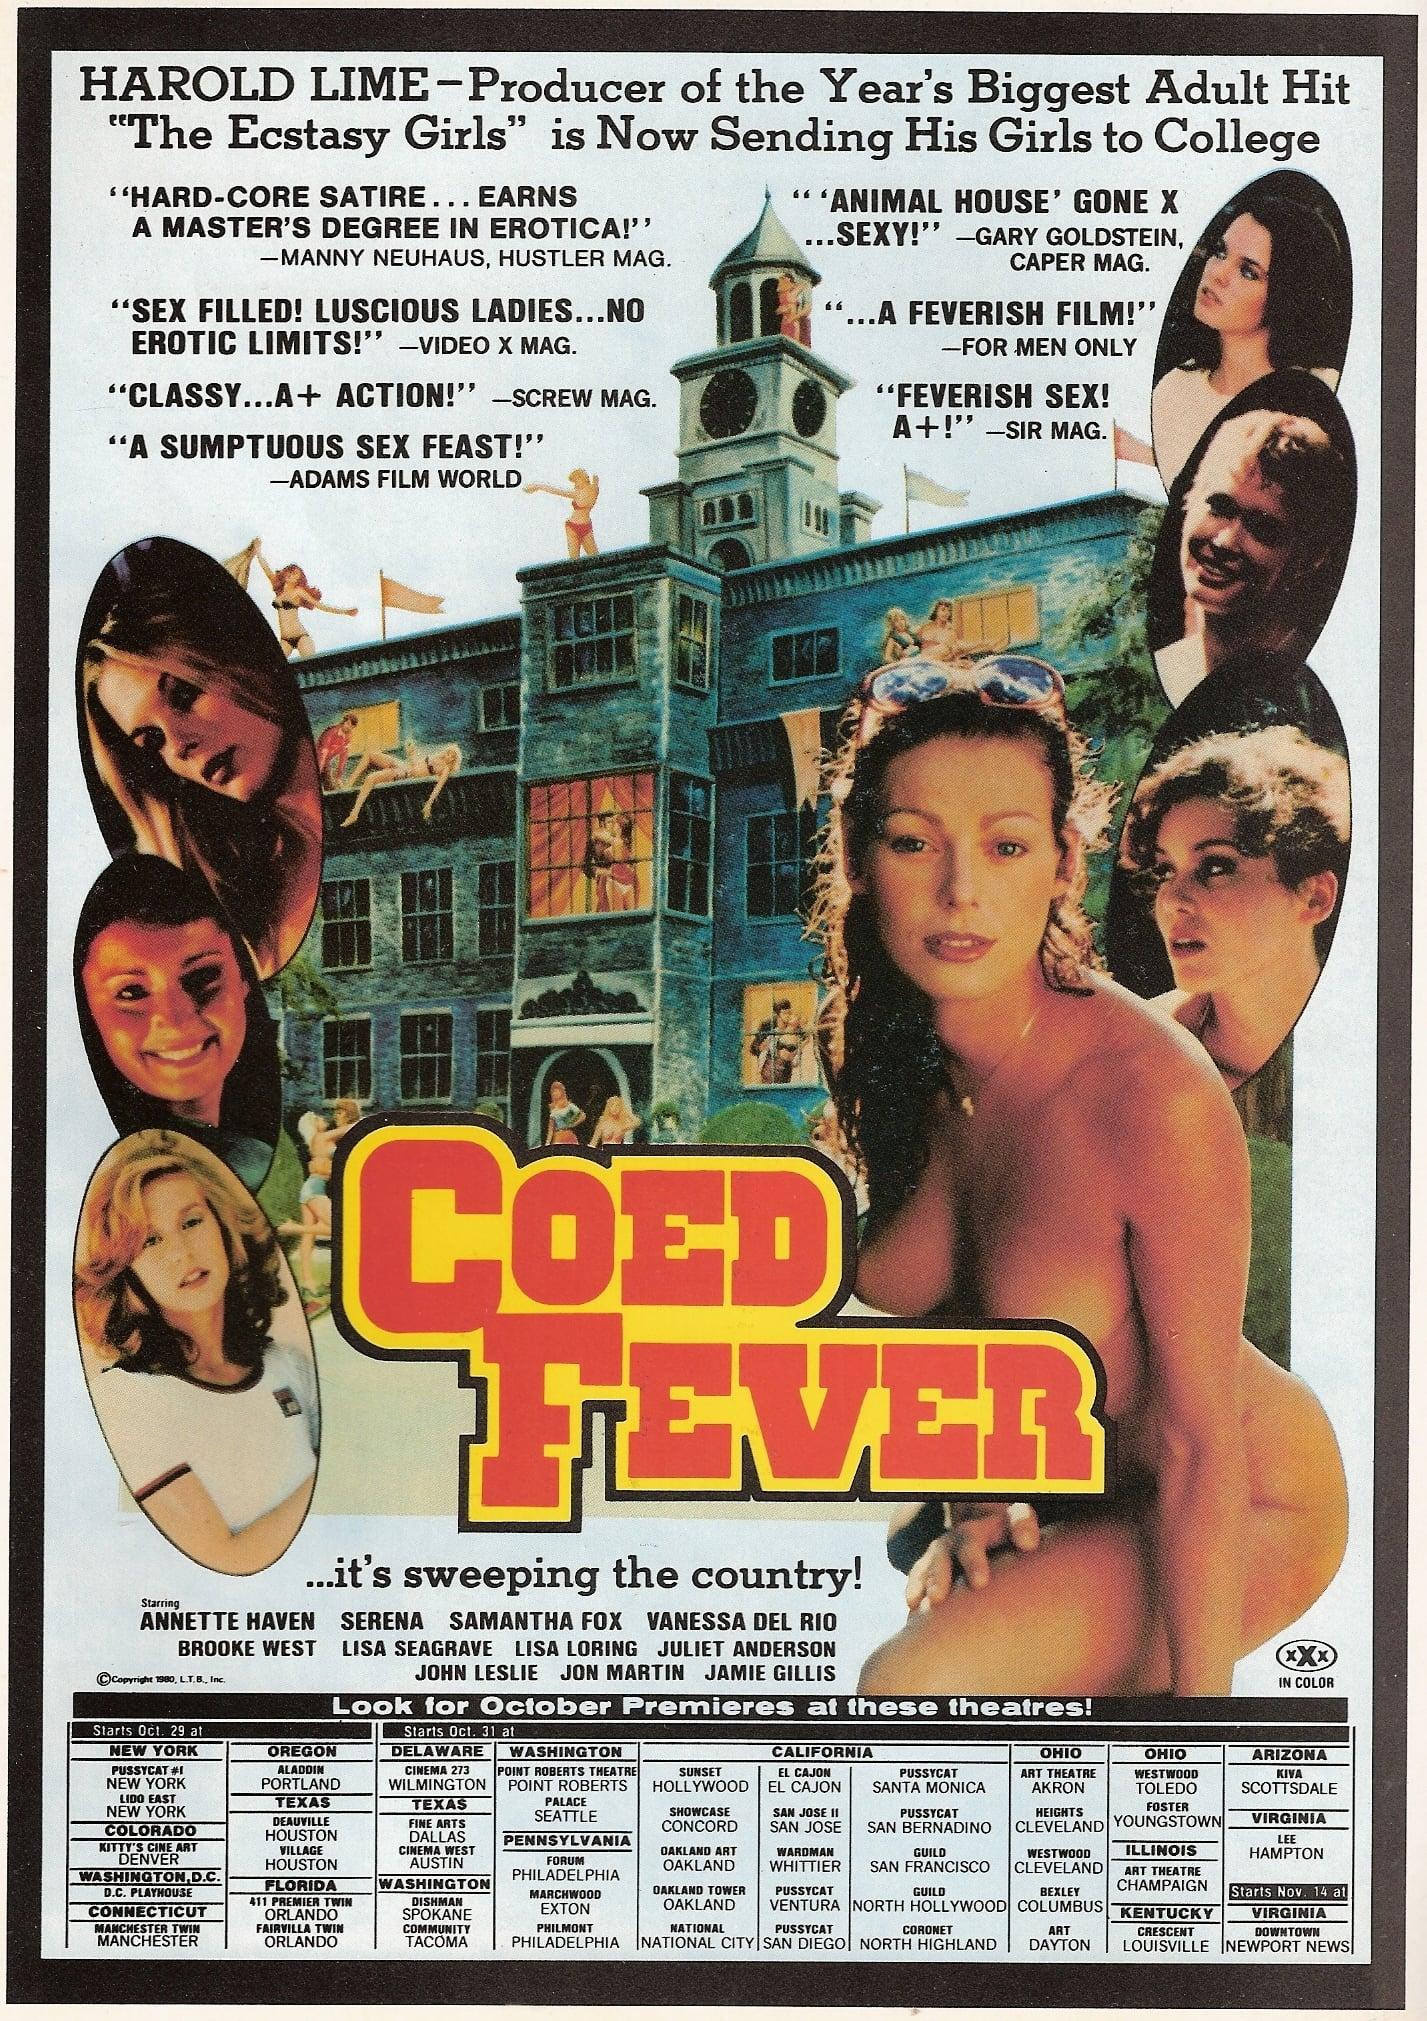 Co-Ed Fever poster